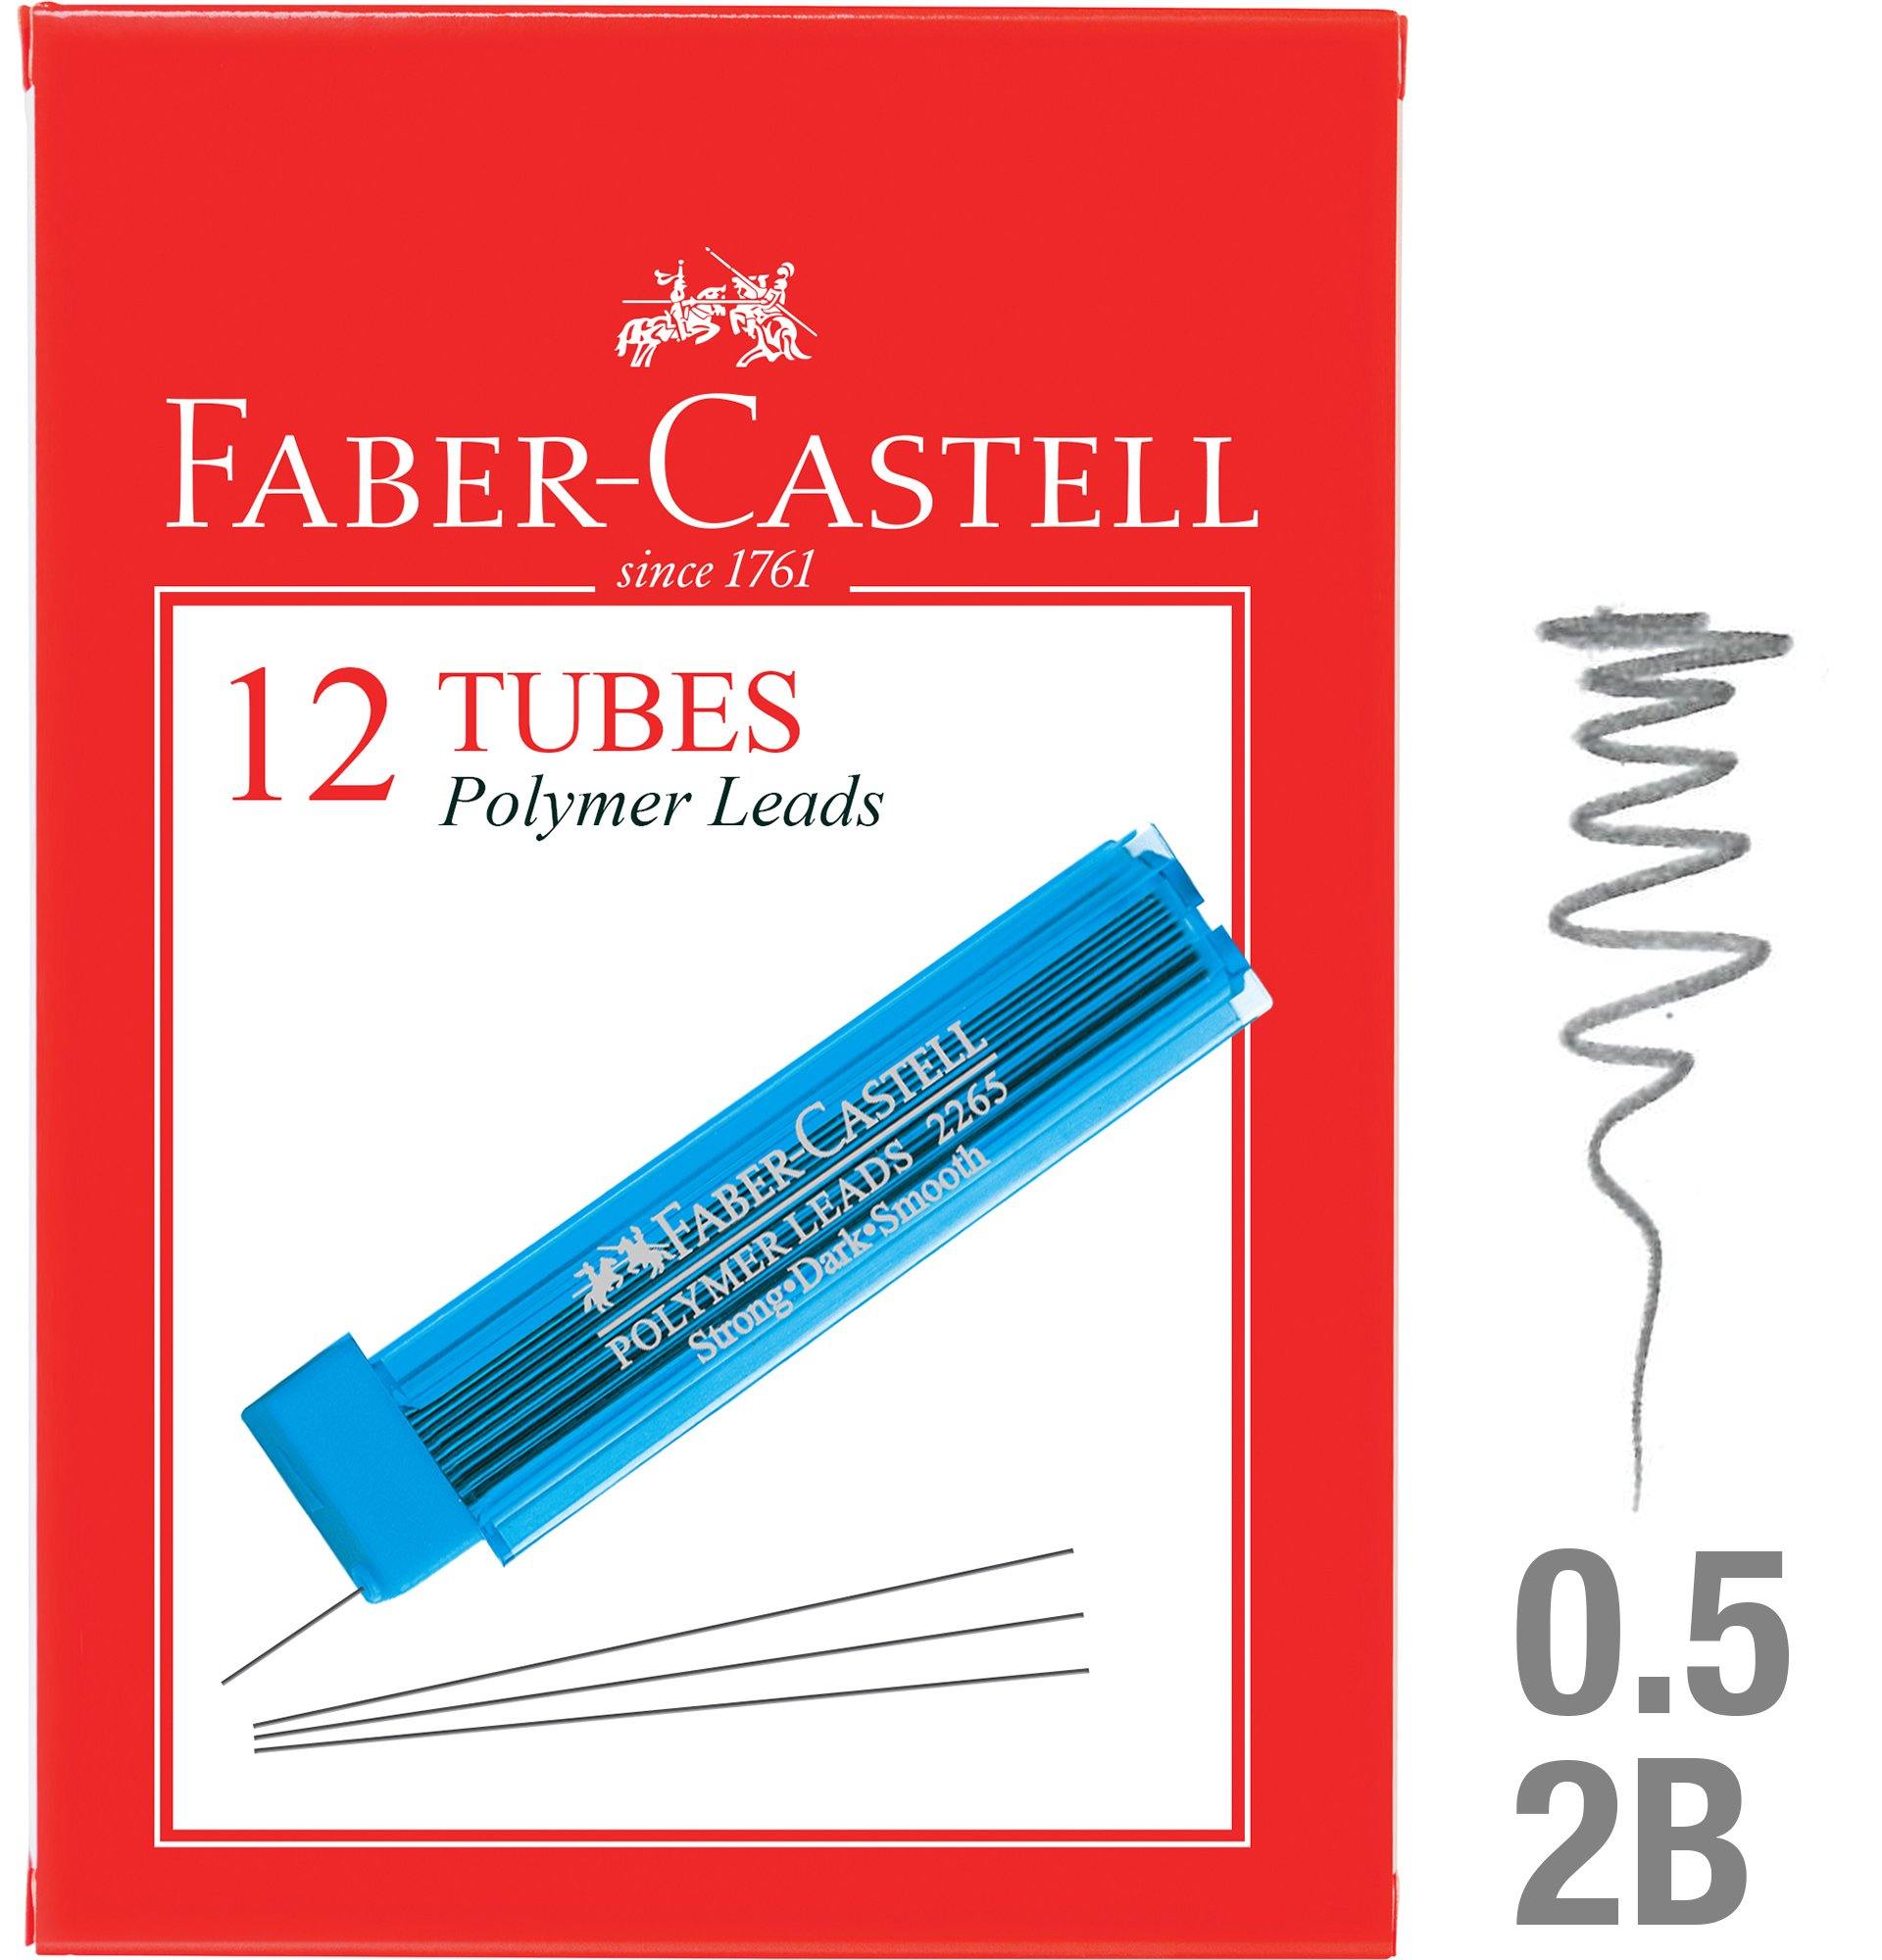 Faber Castell Pitt Pastel Pencil individual